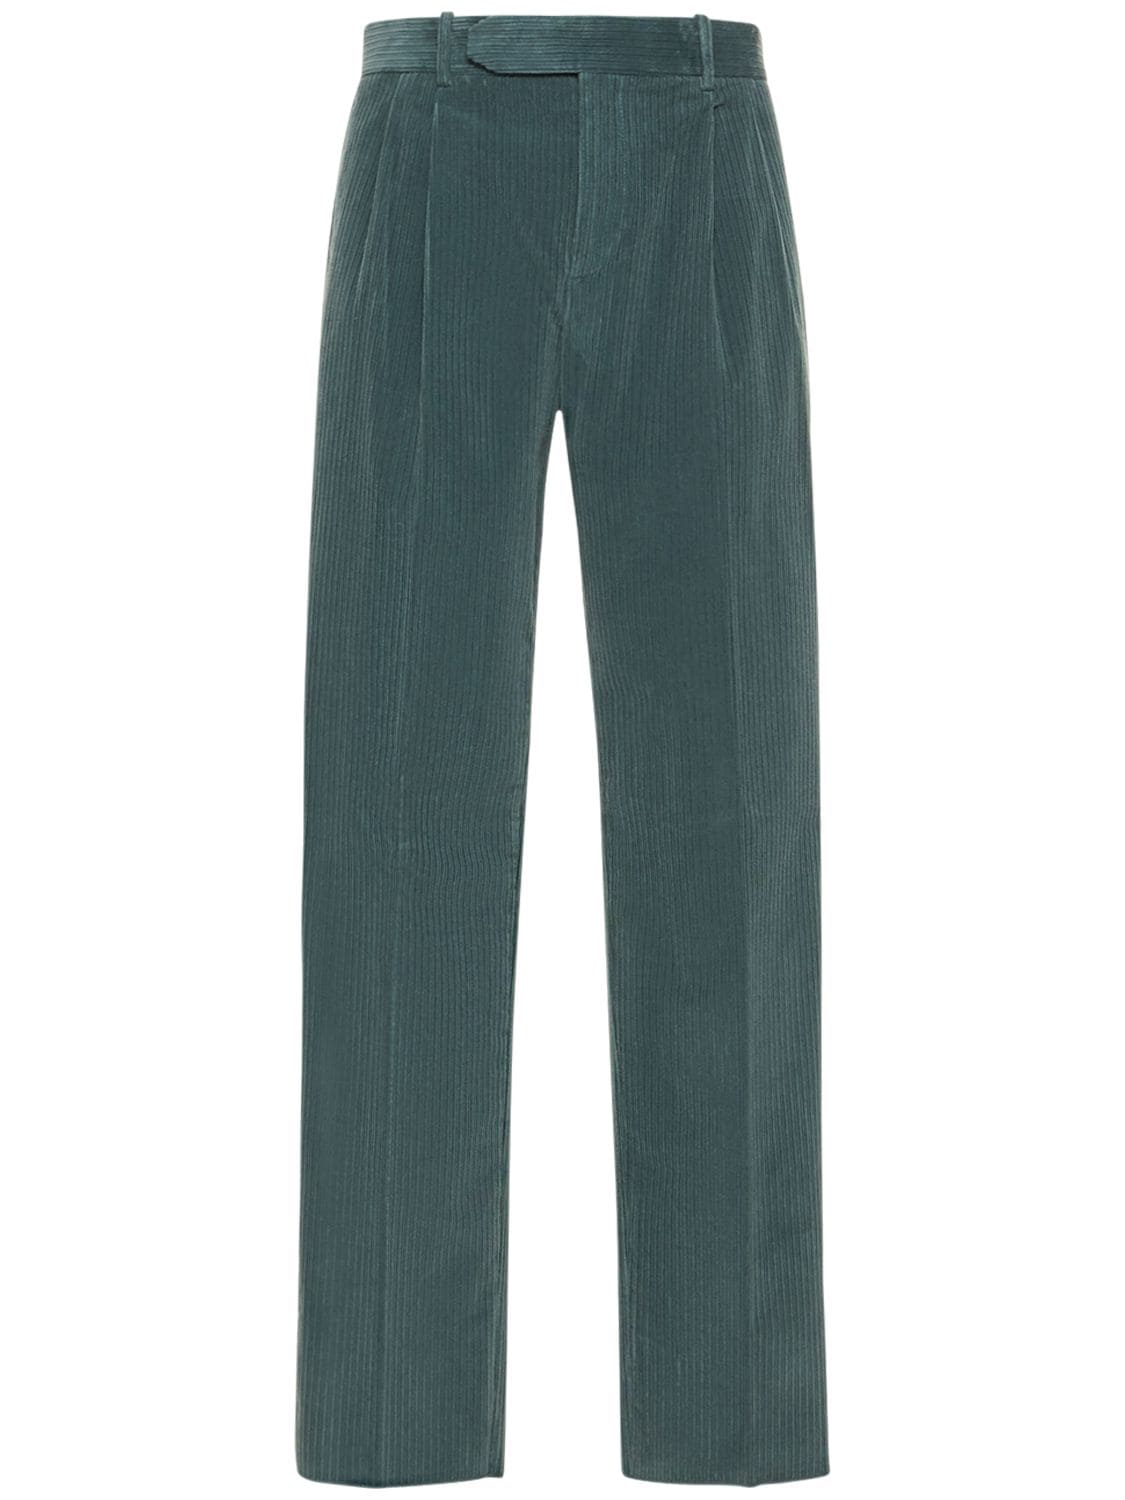 LORO PIANA JASPER STRETCH CORDUROY trousers